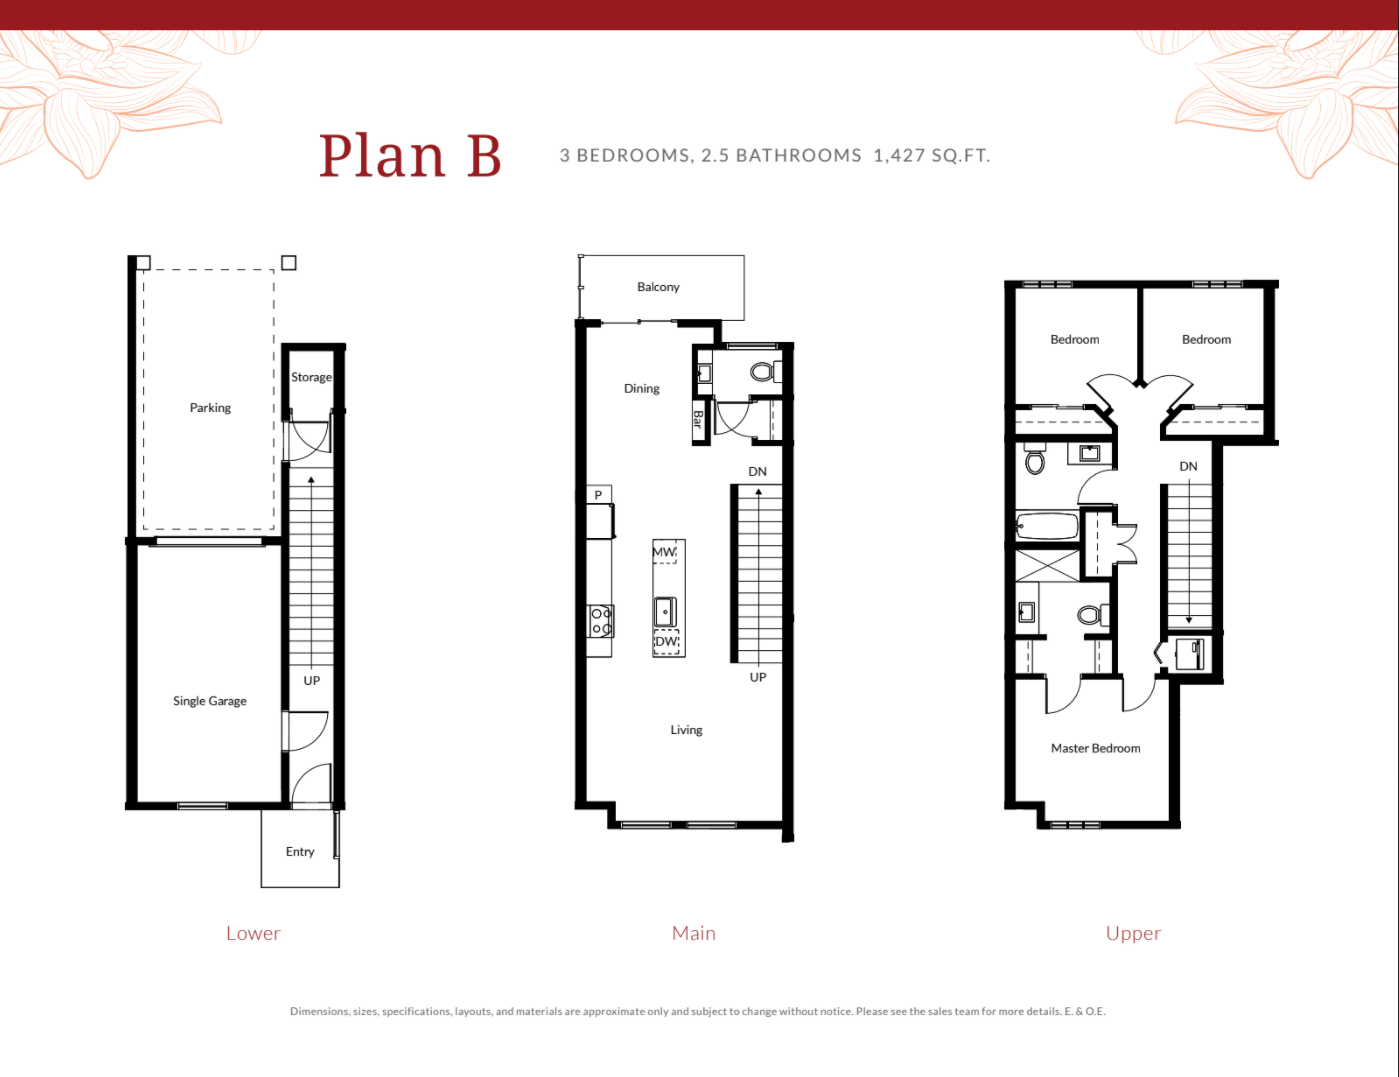  Plan B  Floor Plan of Hepburn Towns with undefined beds